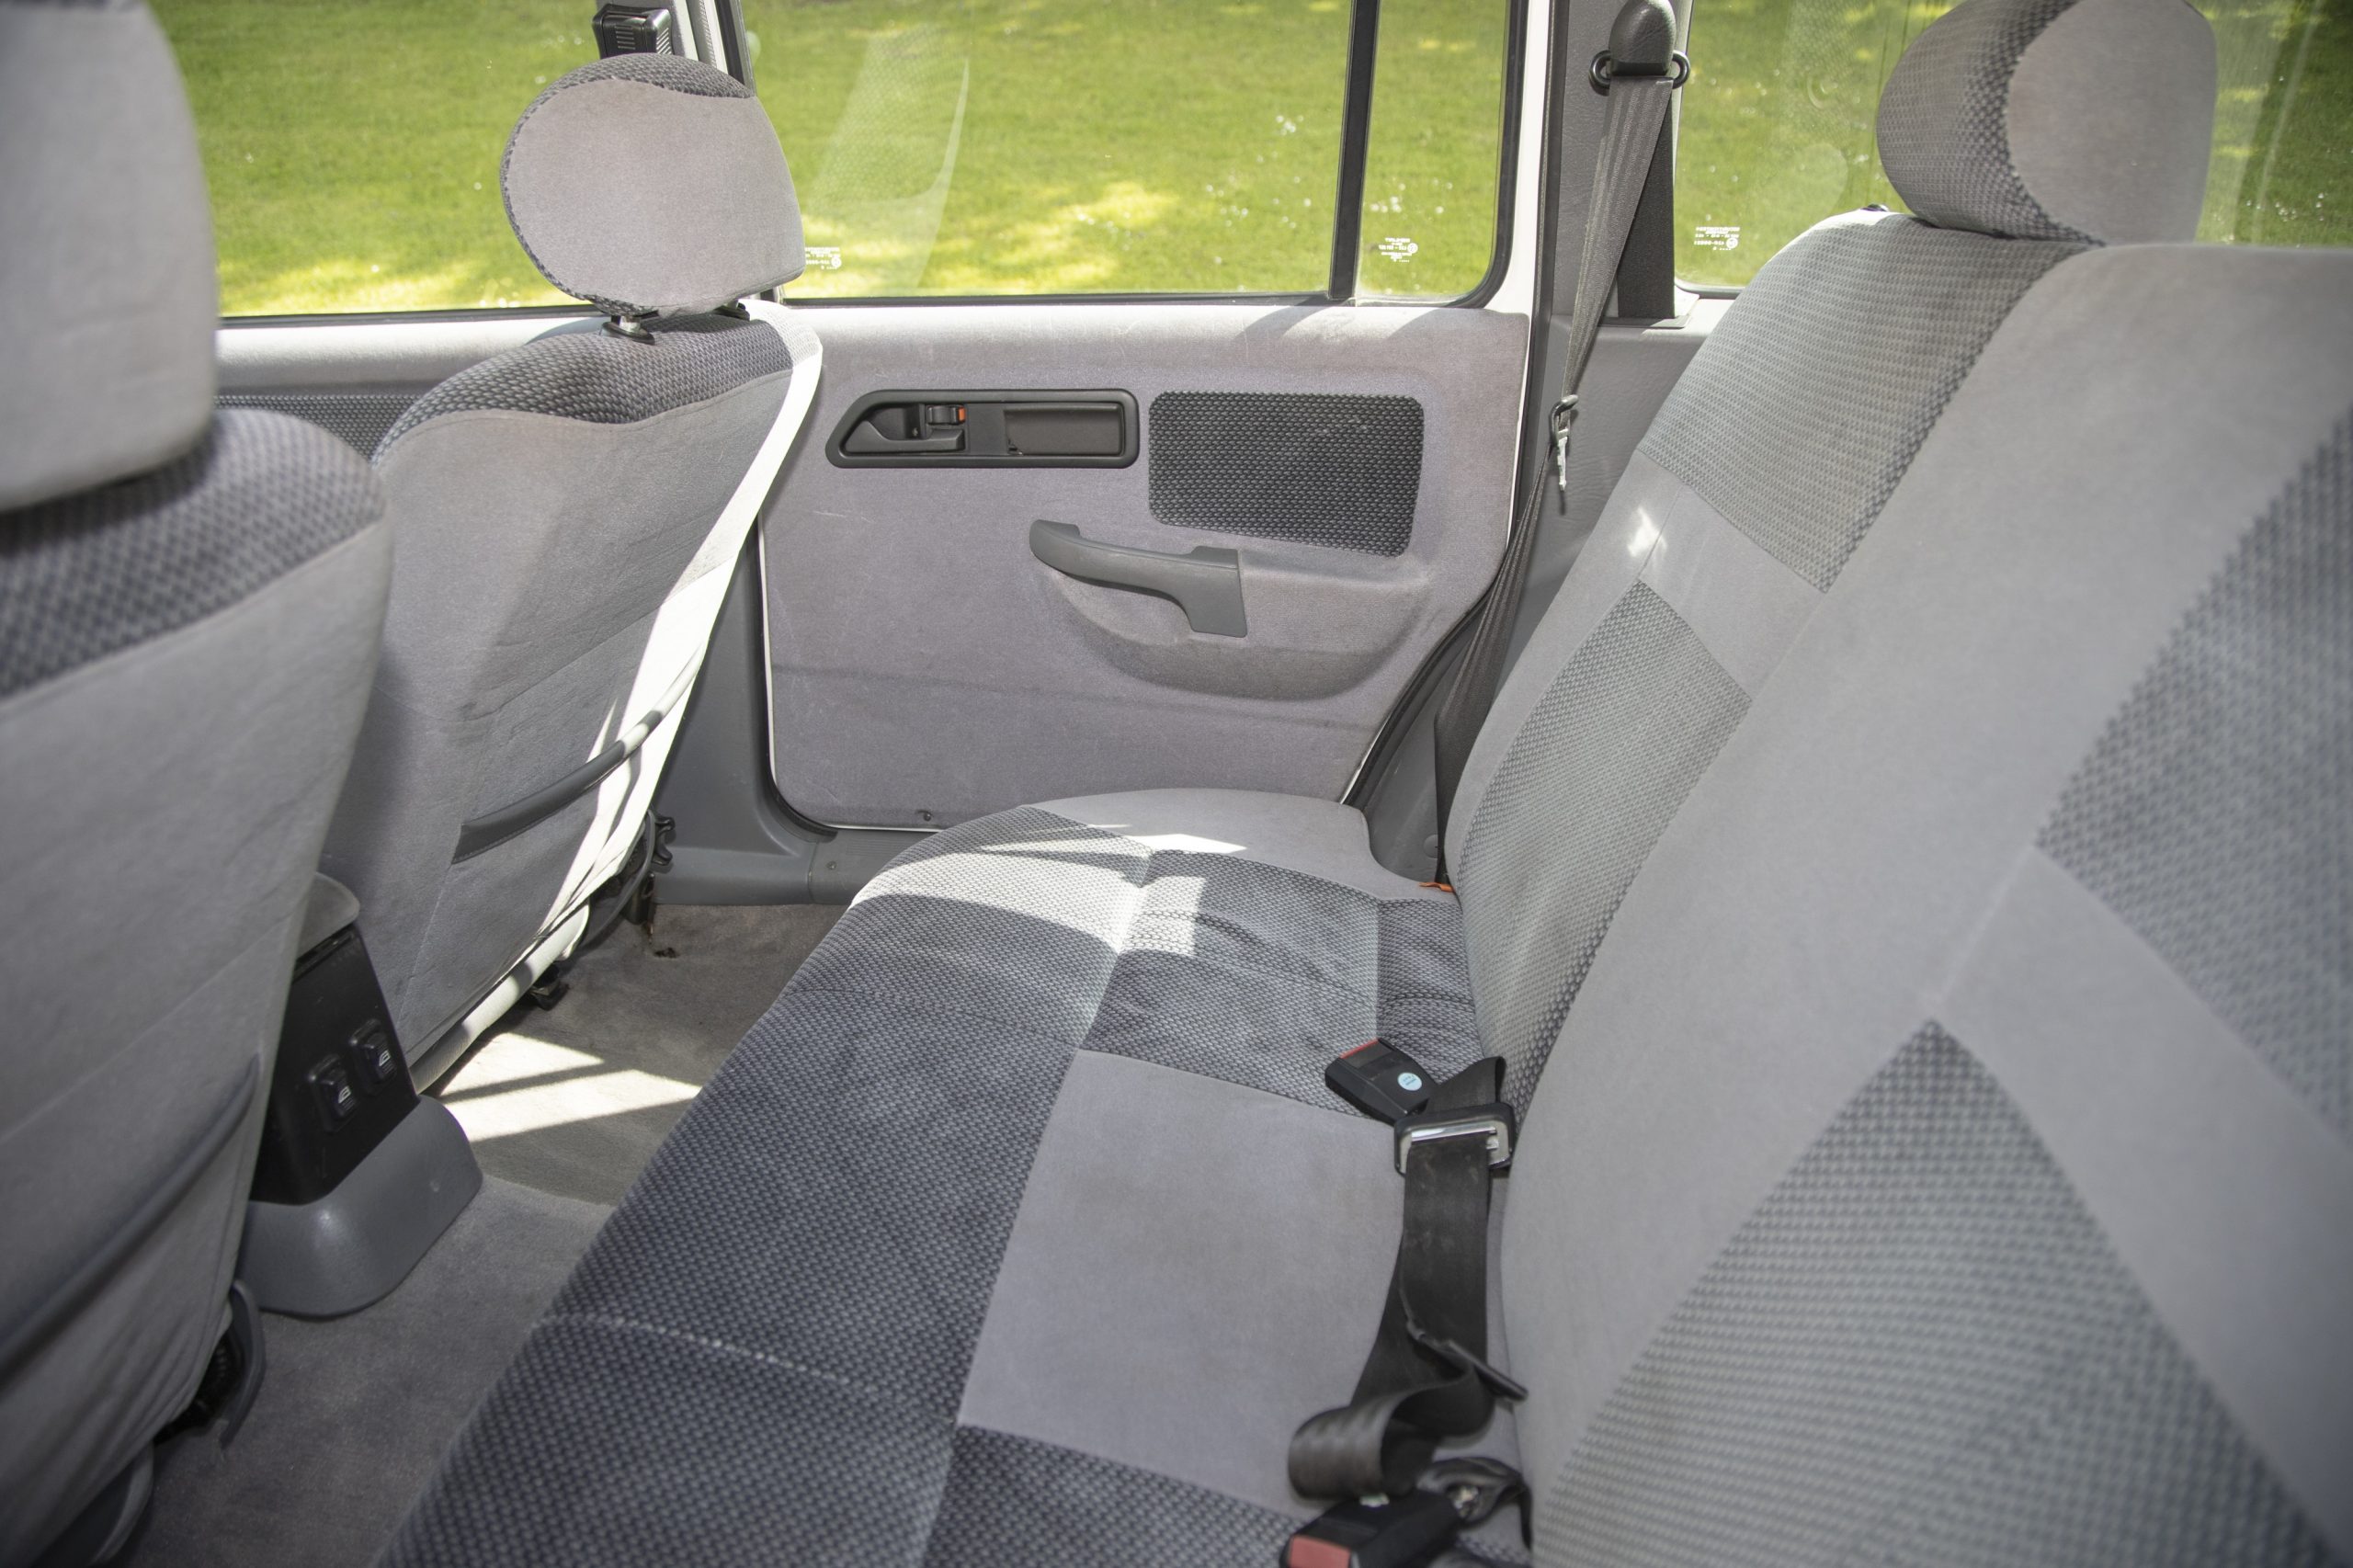 Ford Sierra interior